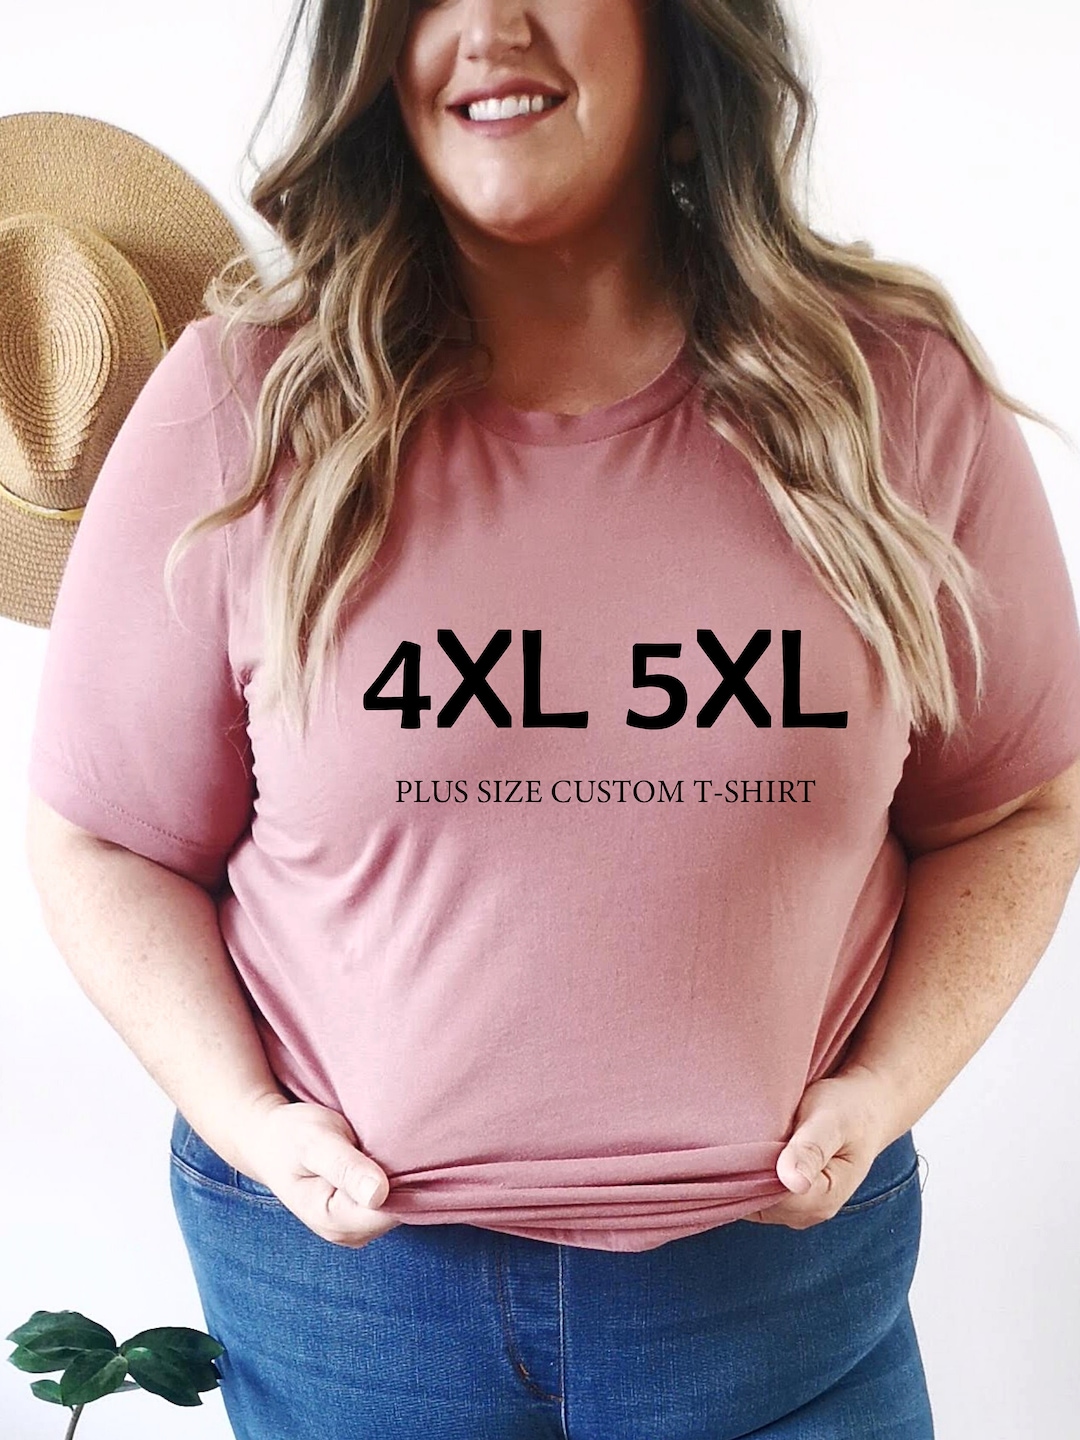 PLUS Unisex Tshirt 2XL 3XL 4XL 5XL Plus Size - Etsy Hong Kong